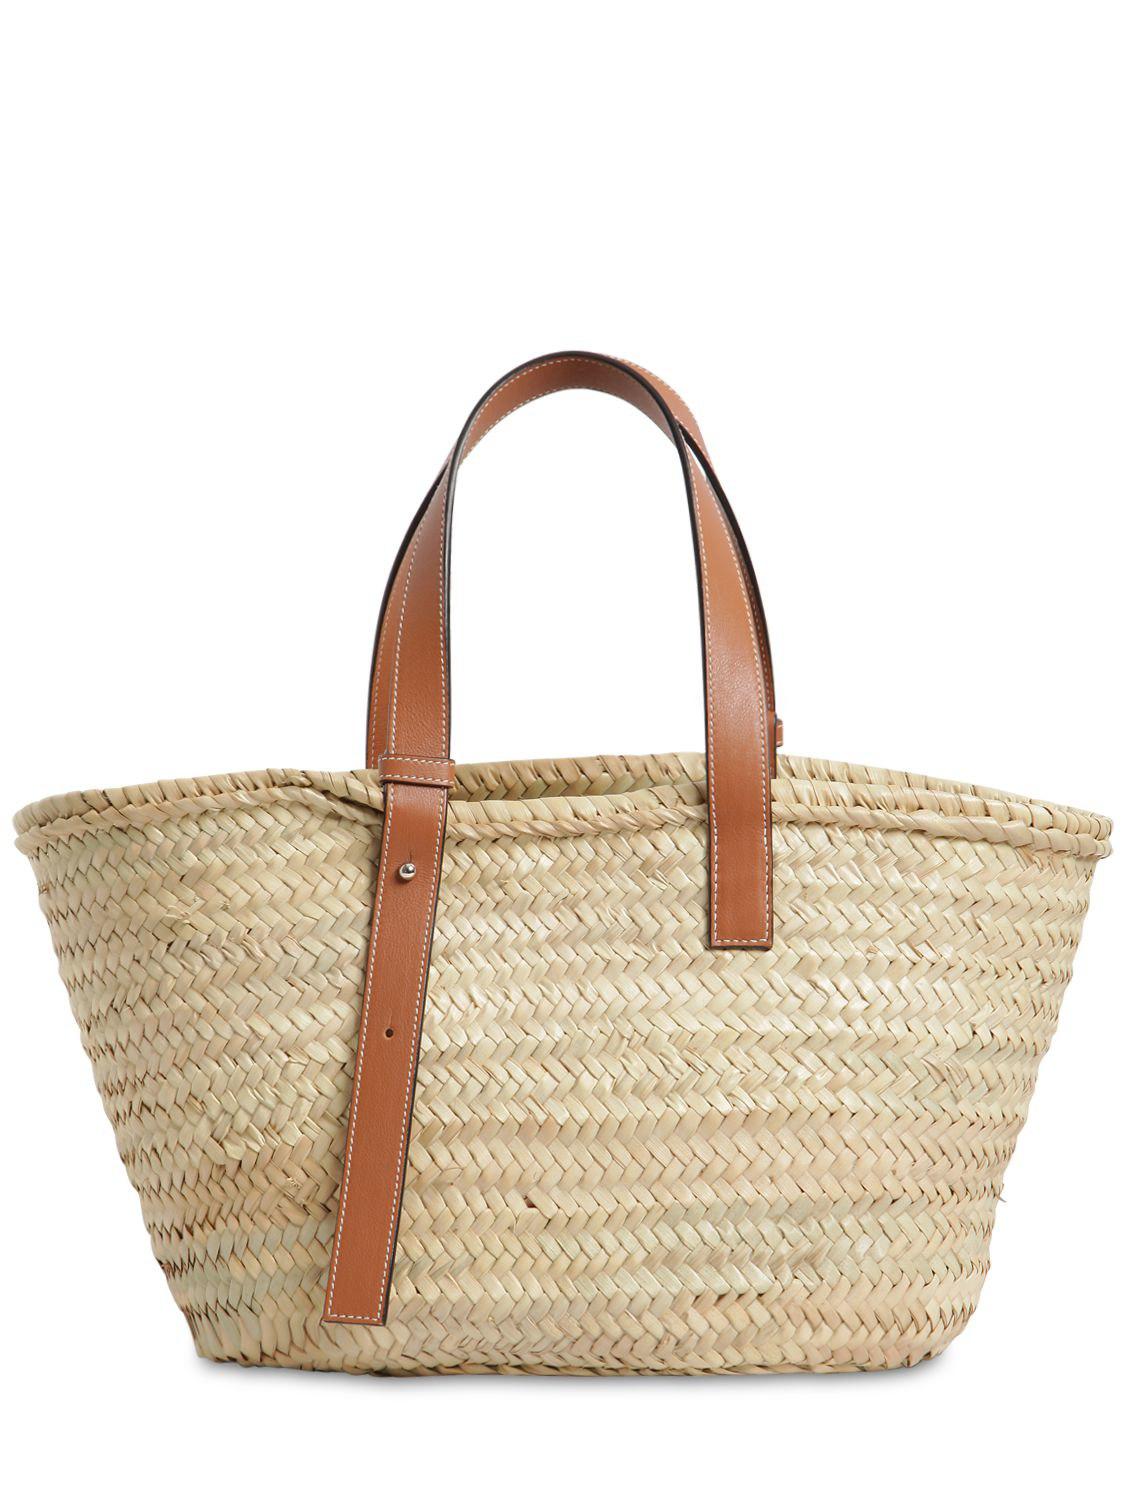 Loewe Leather Womens Natural/tan Open Raffia Basket Bag in Brown 